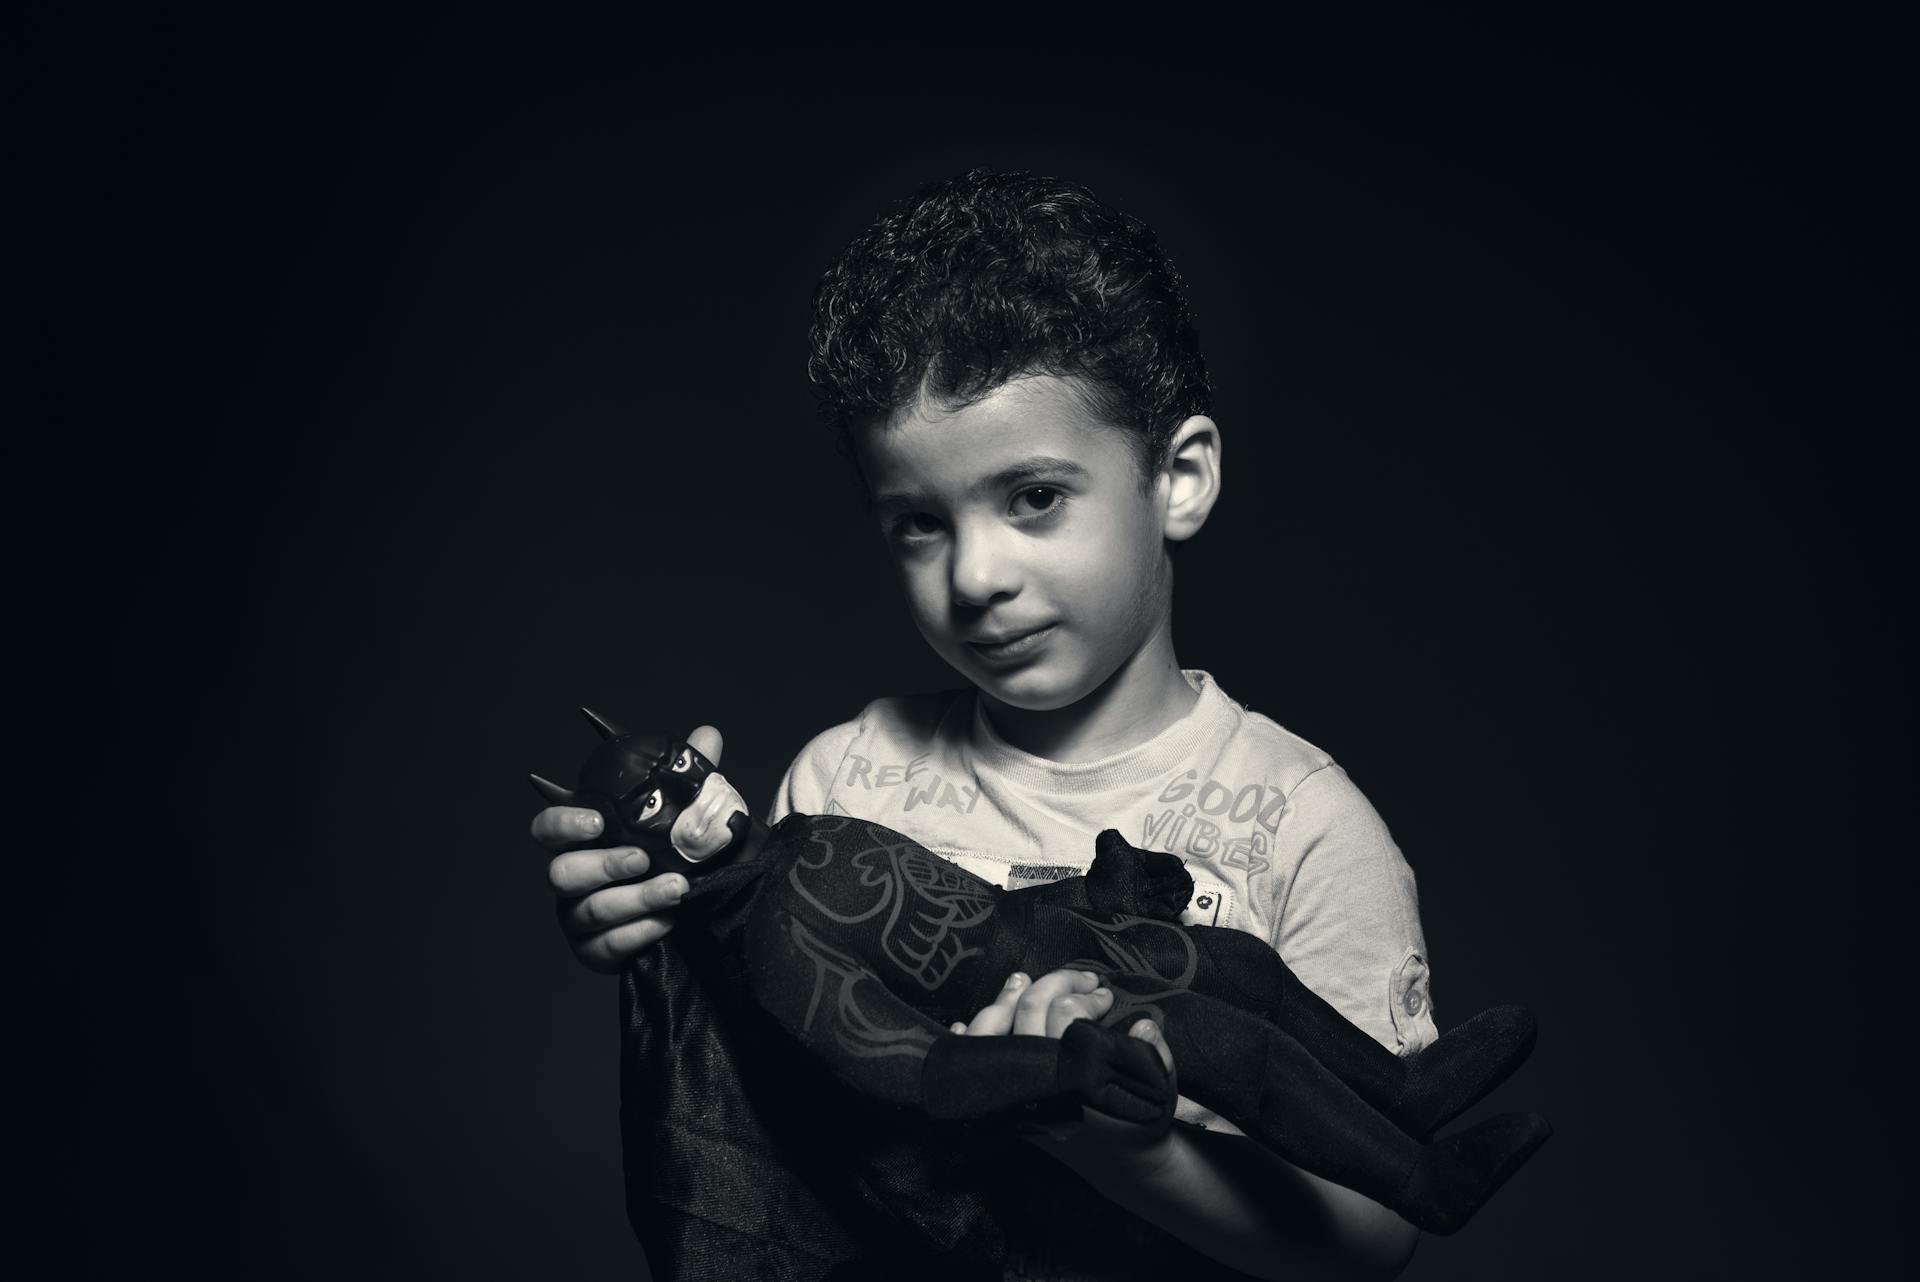 Grayscale Photo of a boy Holding Batman Plush Toy